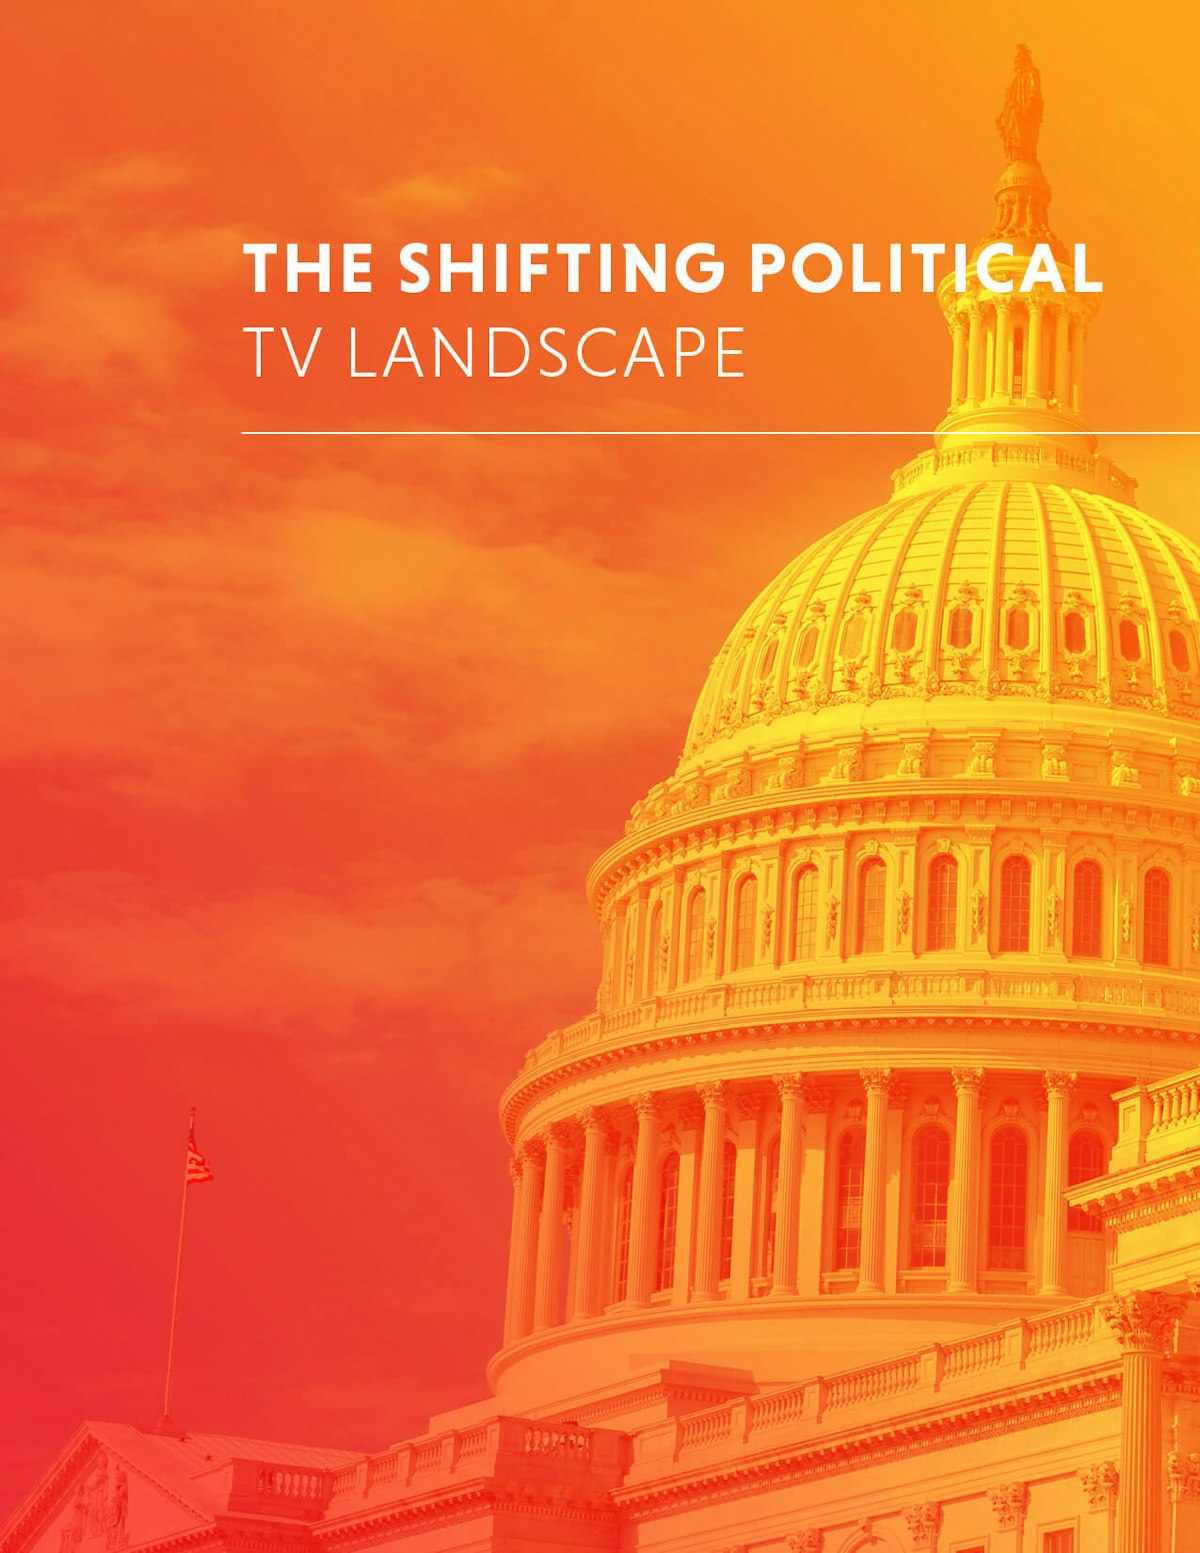 The shifting political TV landscape